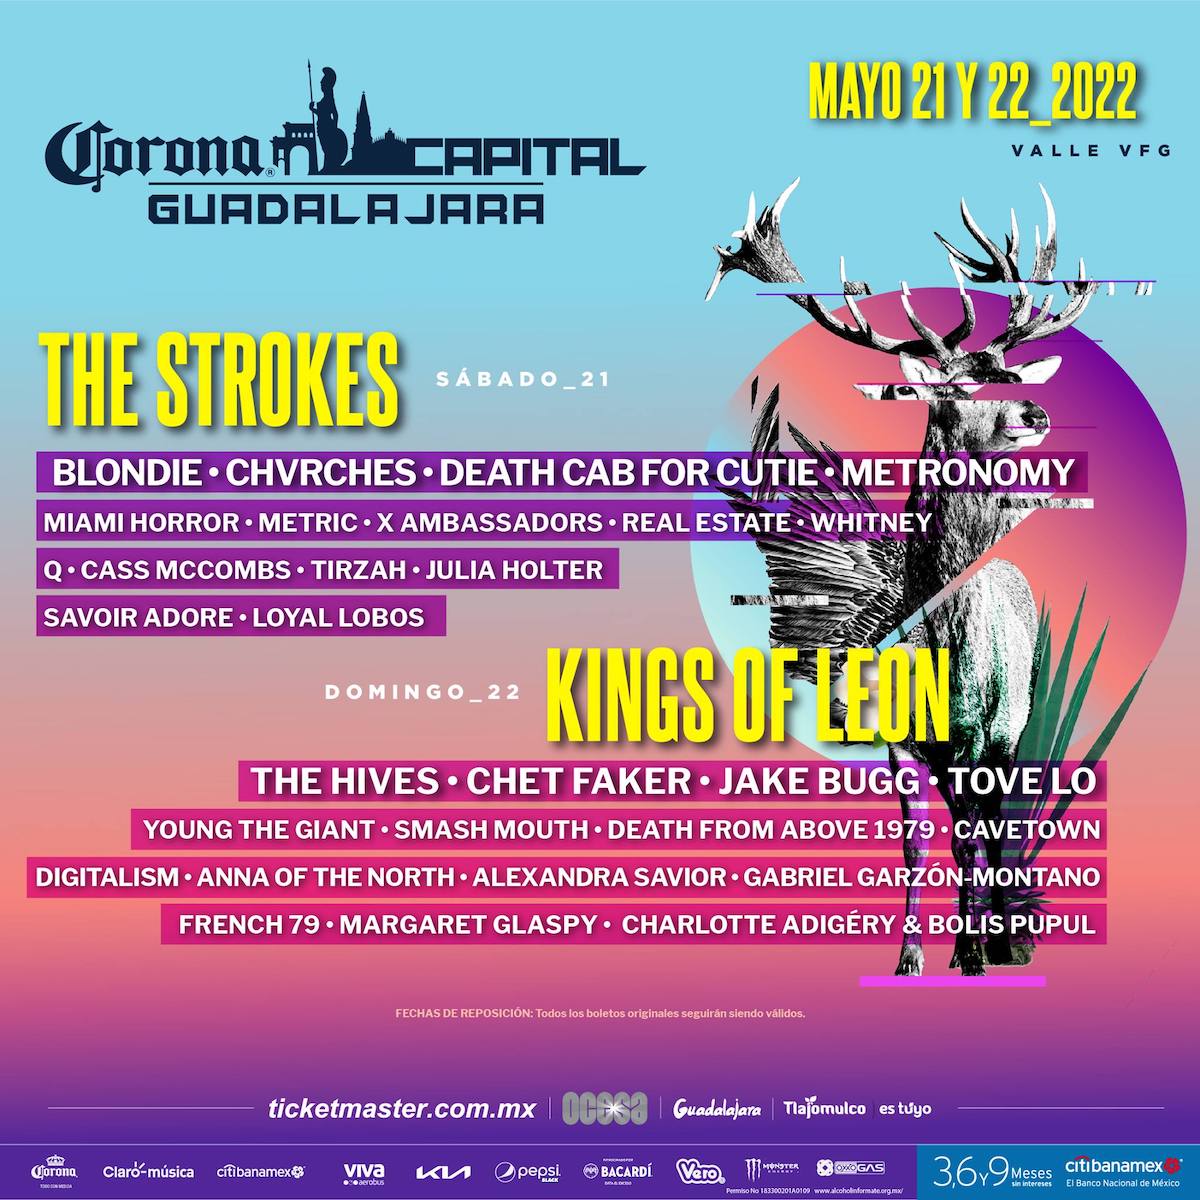 Corona Capital Guadalajara 2022 Mexico Festival